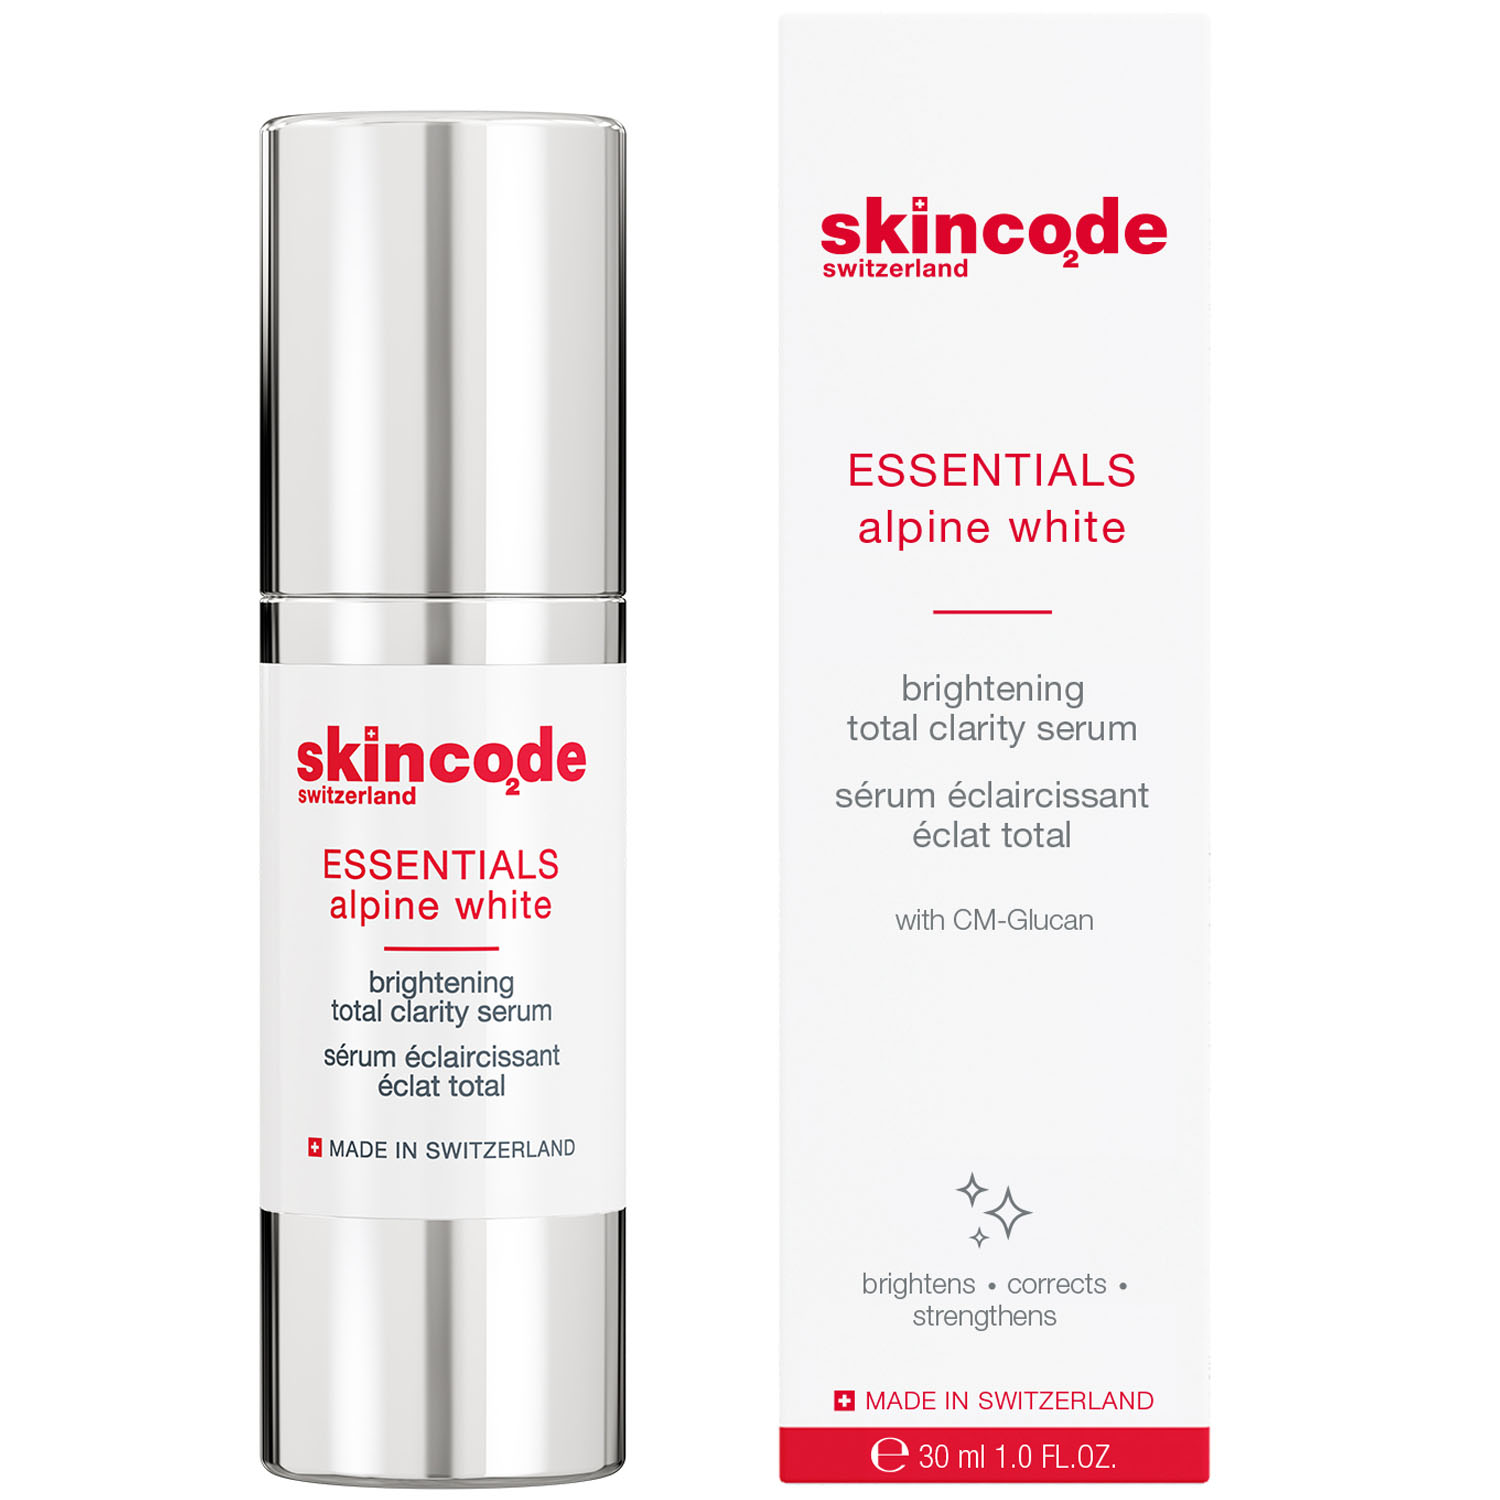 skincode essentials alpine white brightening total clarity serum осветляющая сыворотка для лица 30 мл Skincode Осветляющая сыворотка, придающая сияние, 30 мл (Skincode, Essentials Alpine White)